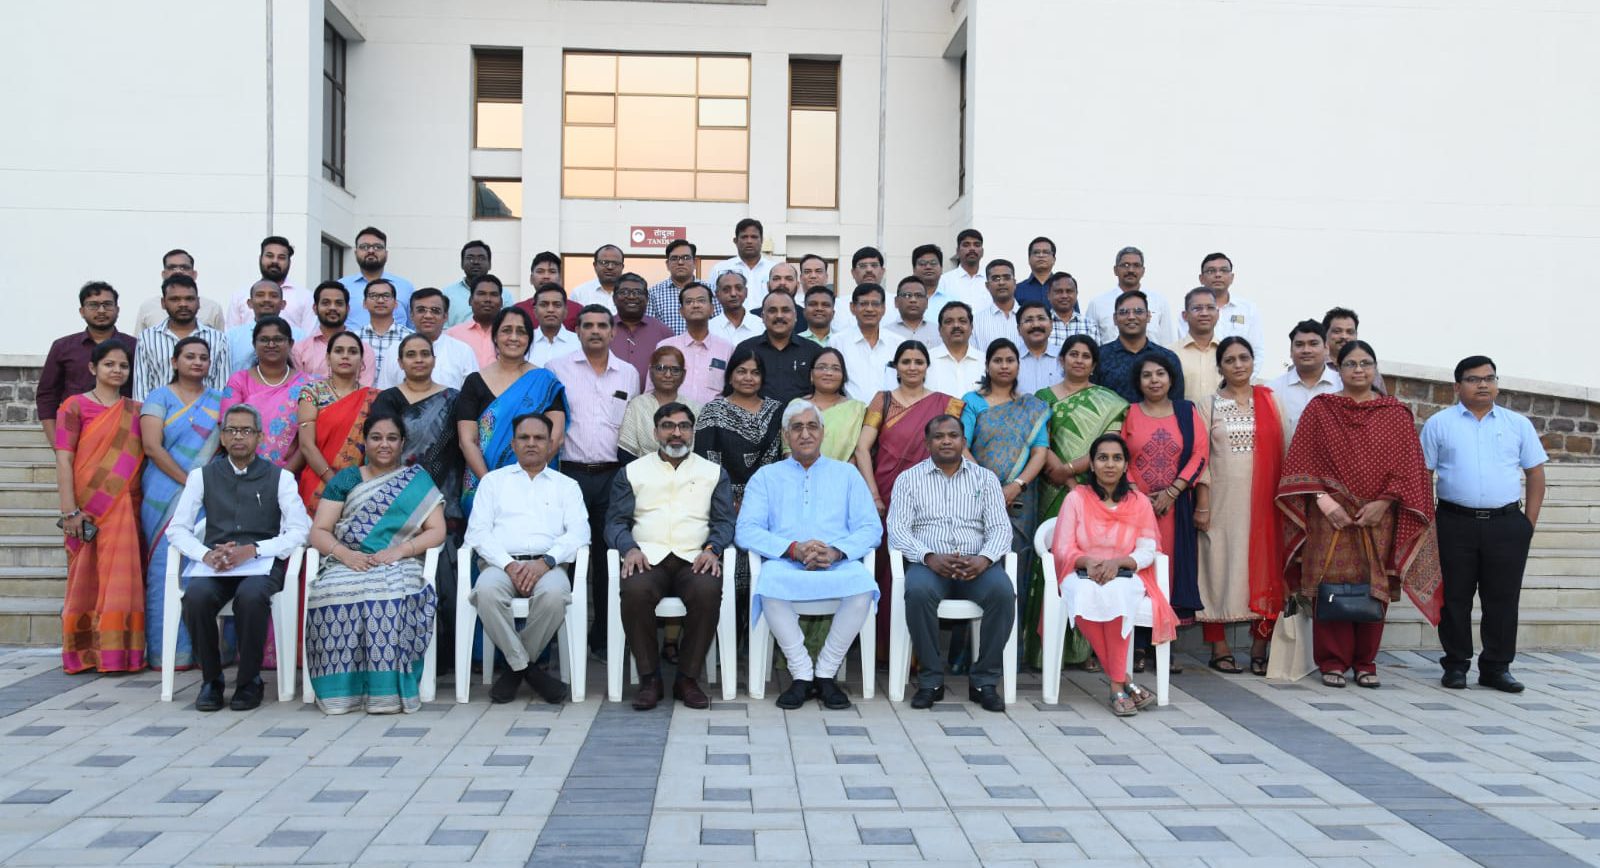 IIM Kozhikode Faculty Prof Ram Kumar Kakani Joins IIM Raipur as New Director